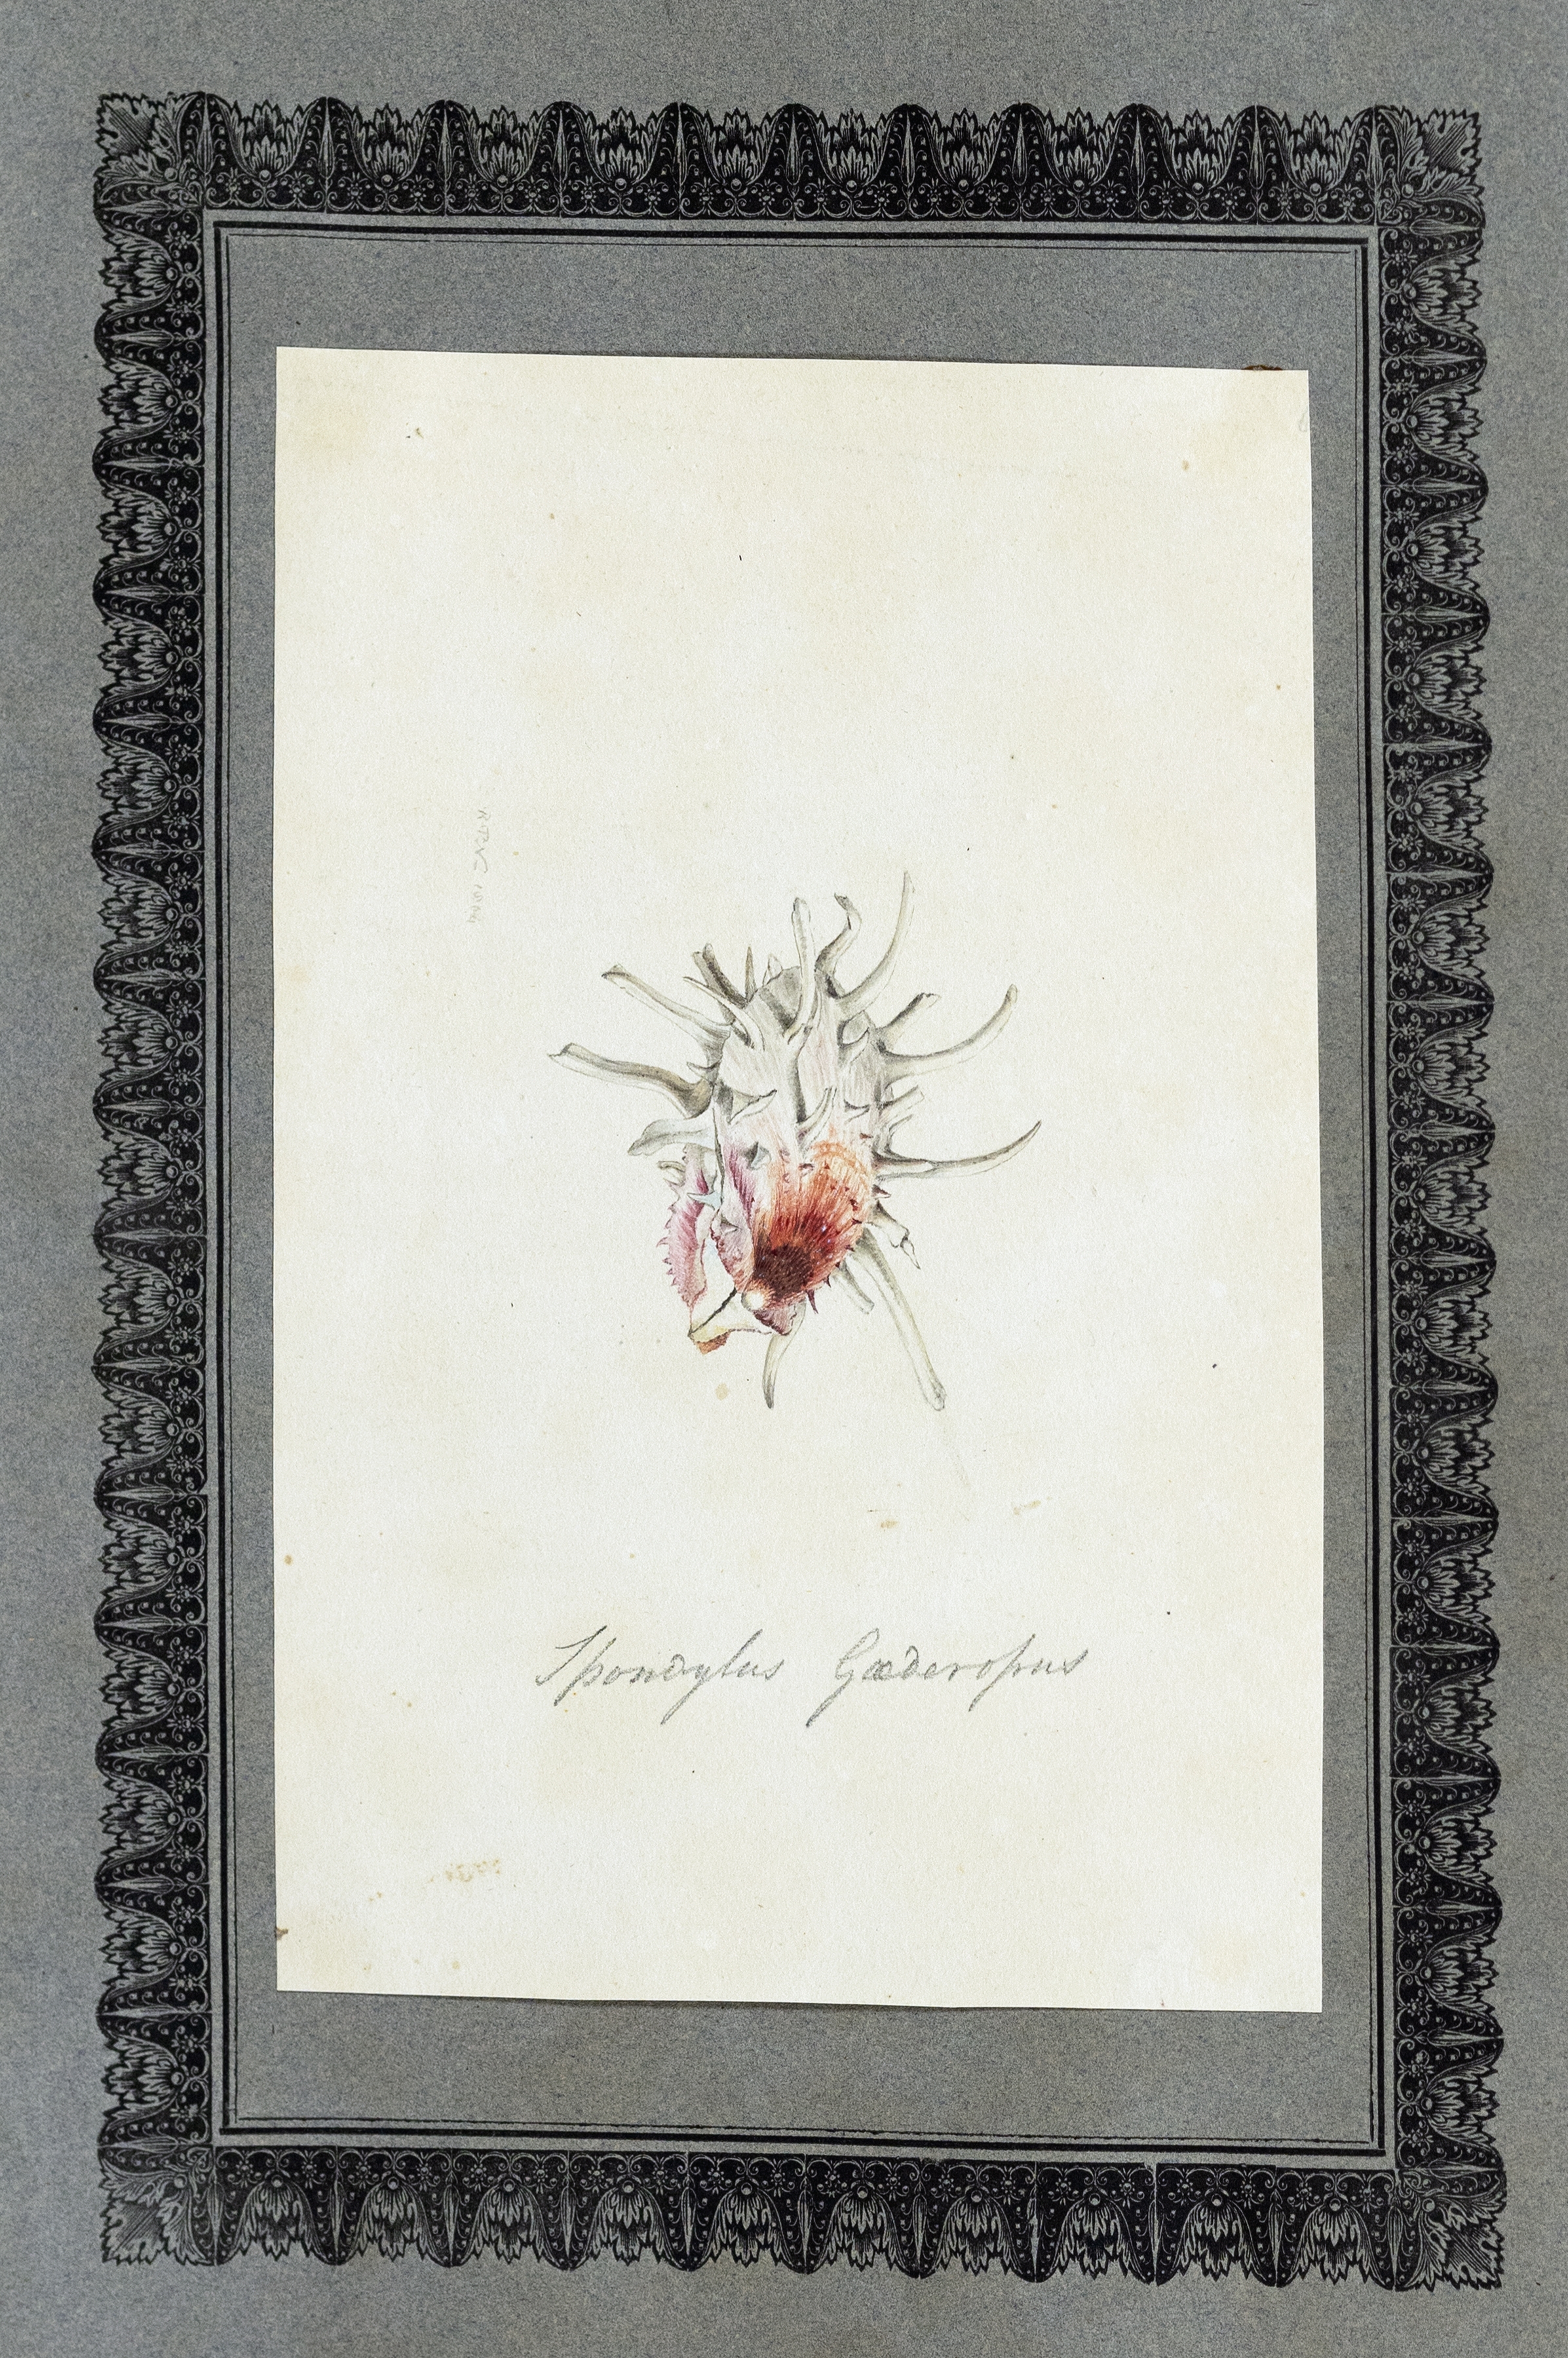 Tpomoglus gaederopus by Richard Polydore Nodder